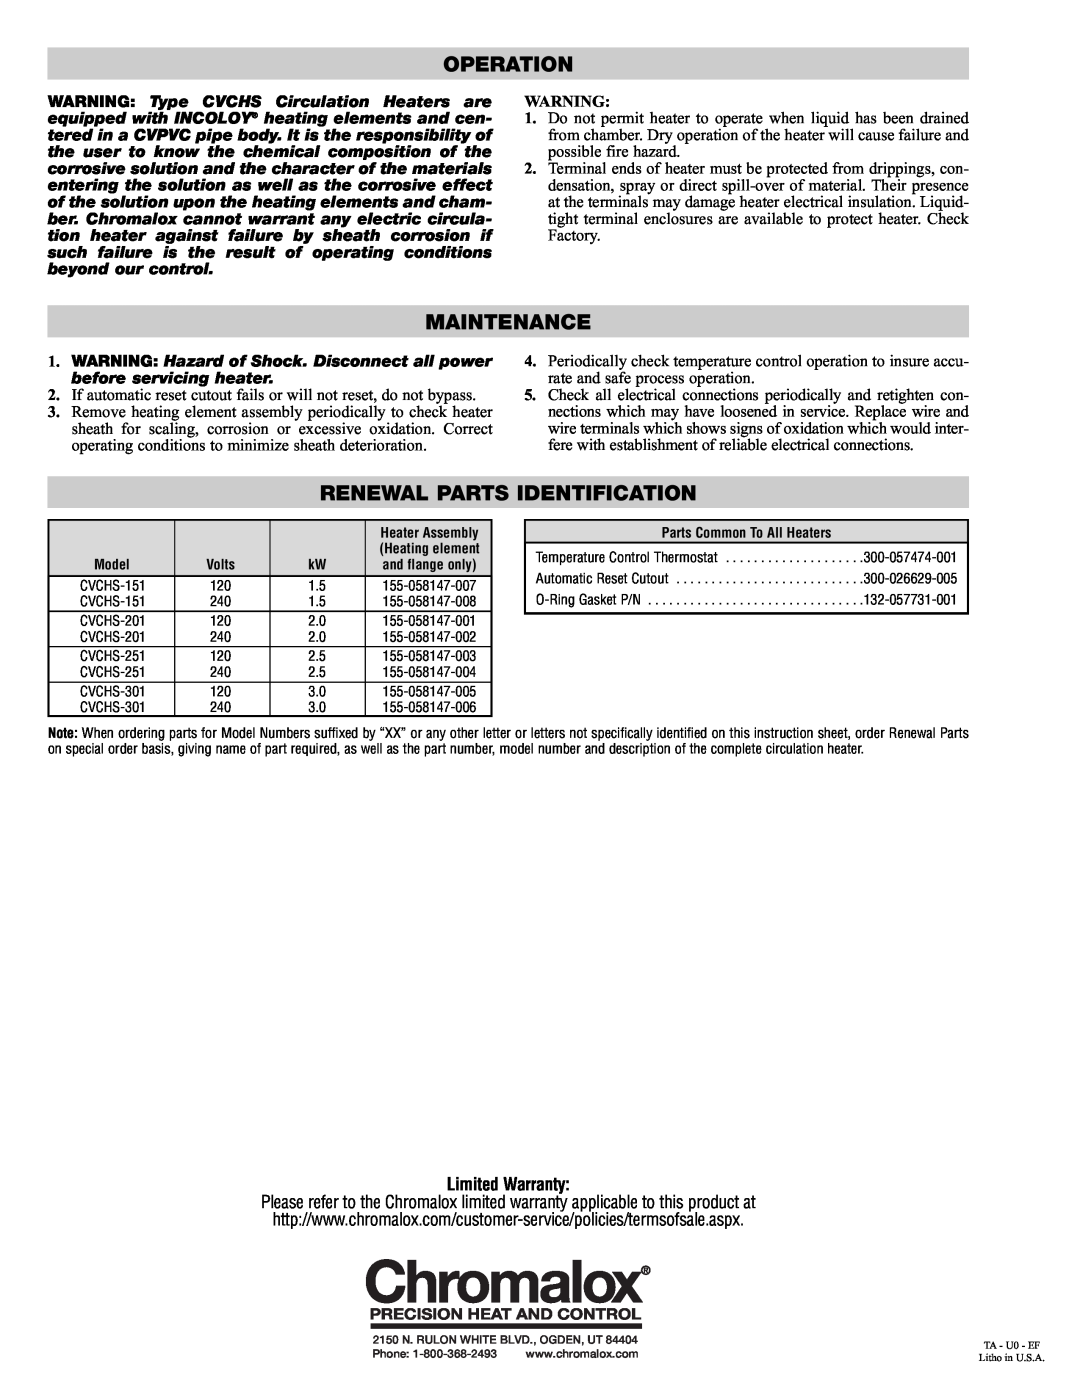 Chromalox PE432-2 specifications Operation, Maintenance, Renewal Parts Identification, Limited Warranty 